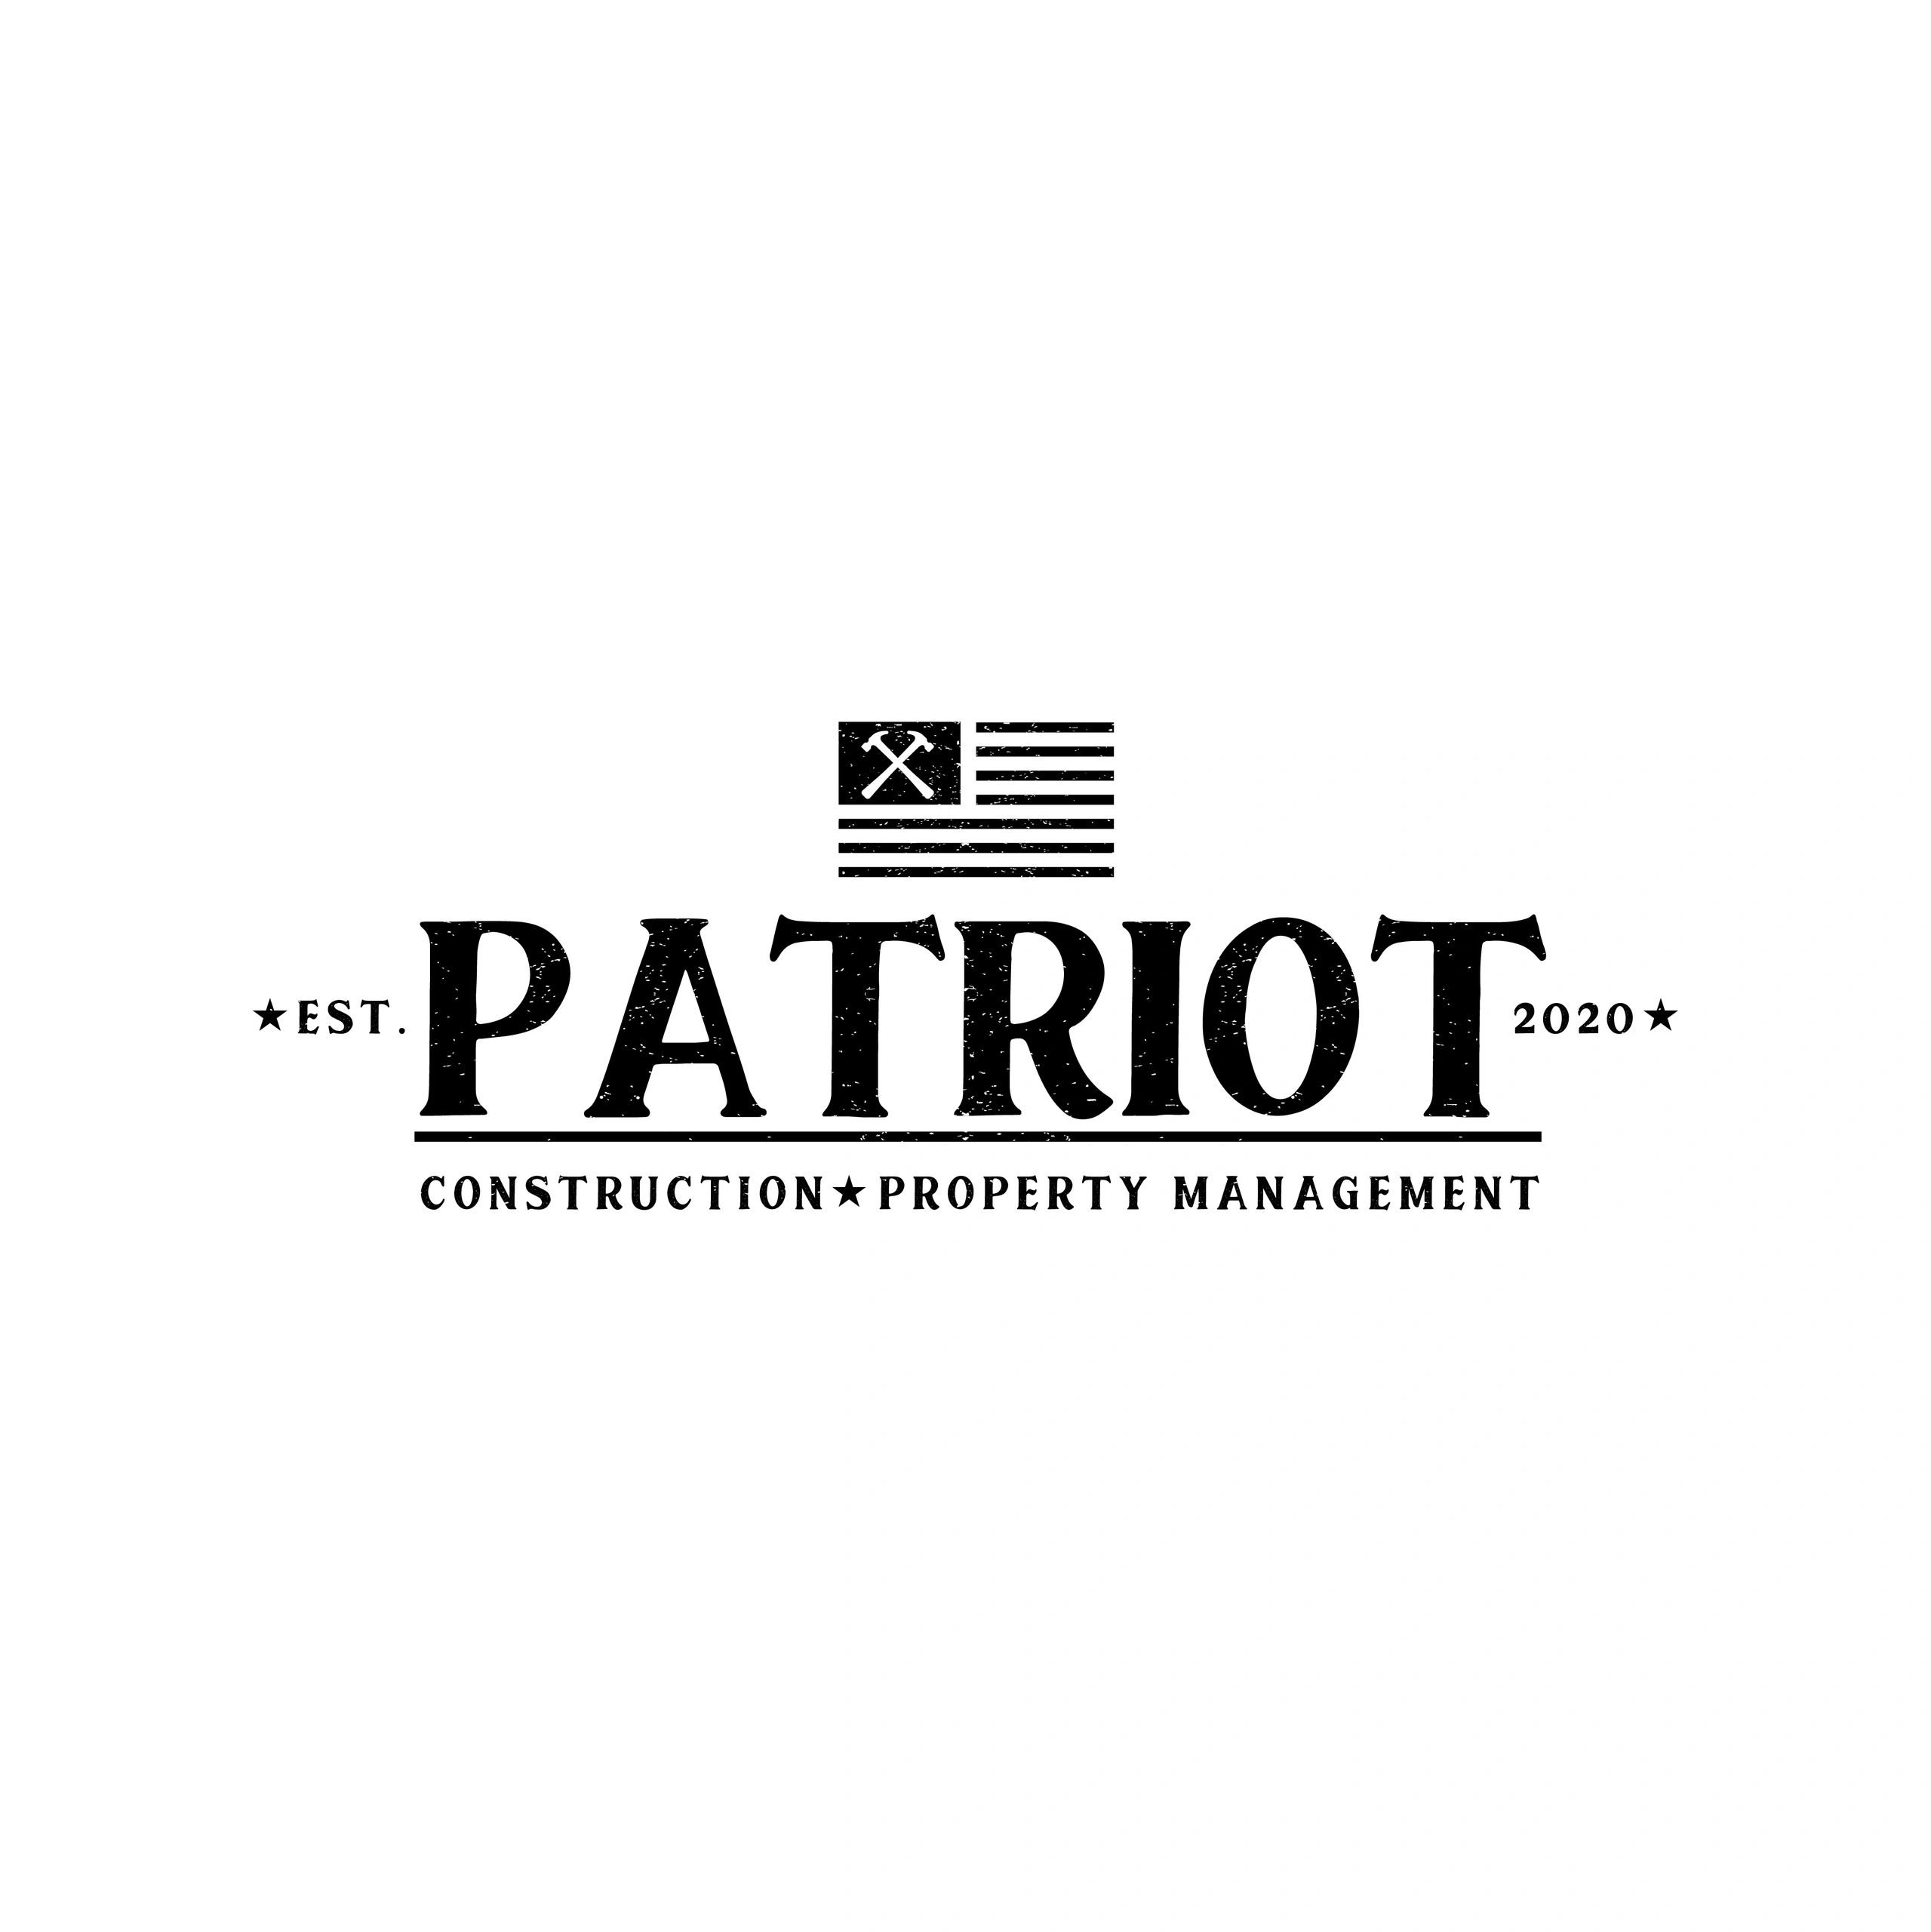 Patriot Construction - Contractor, Construction, Property Management